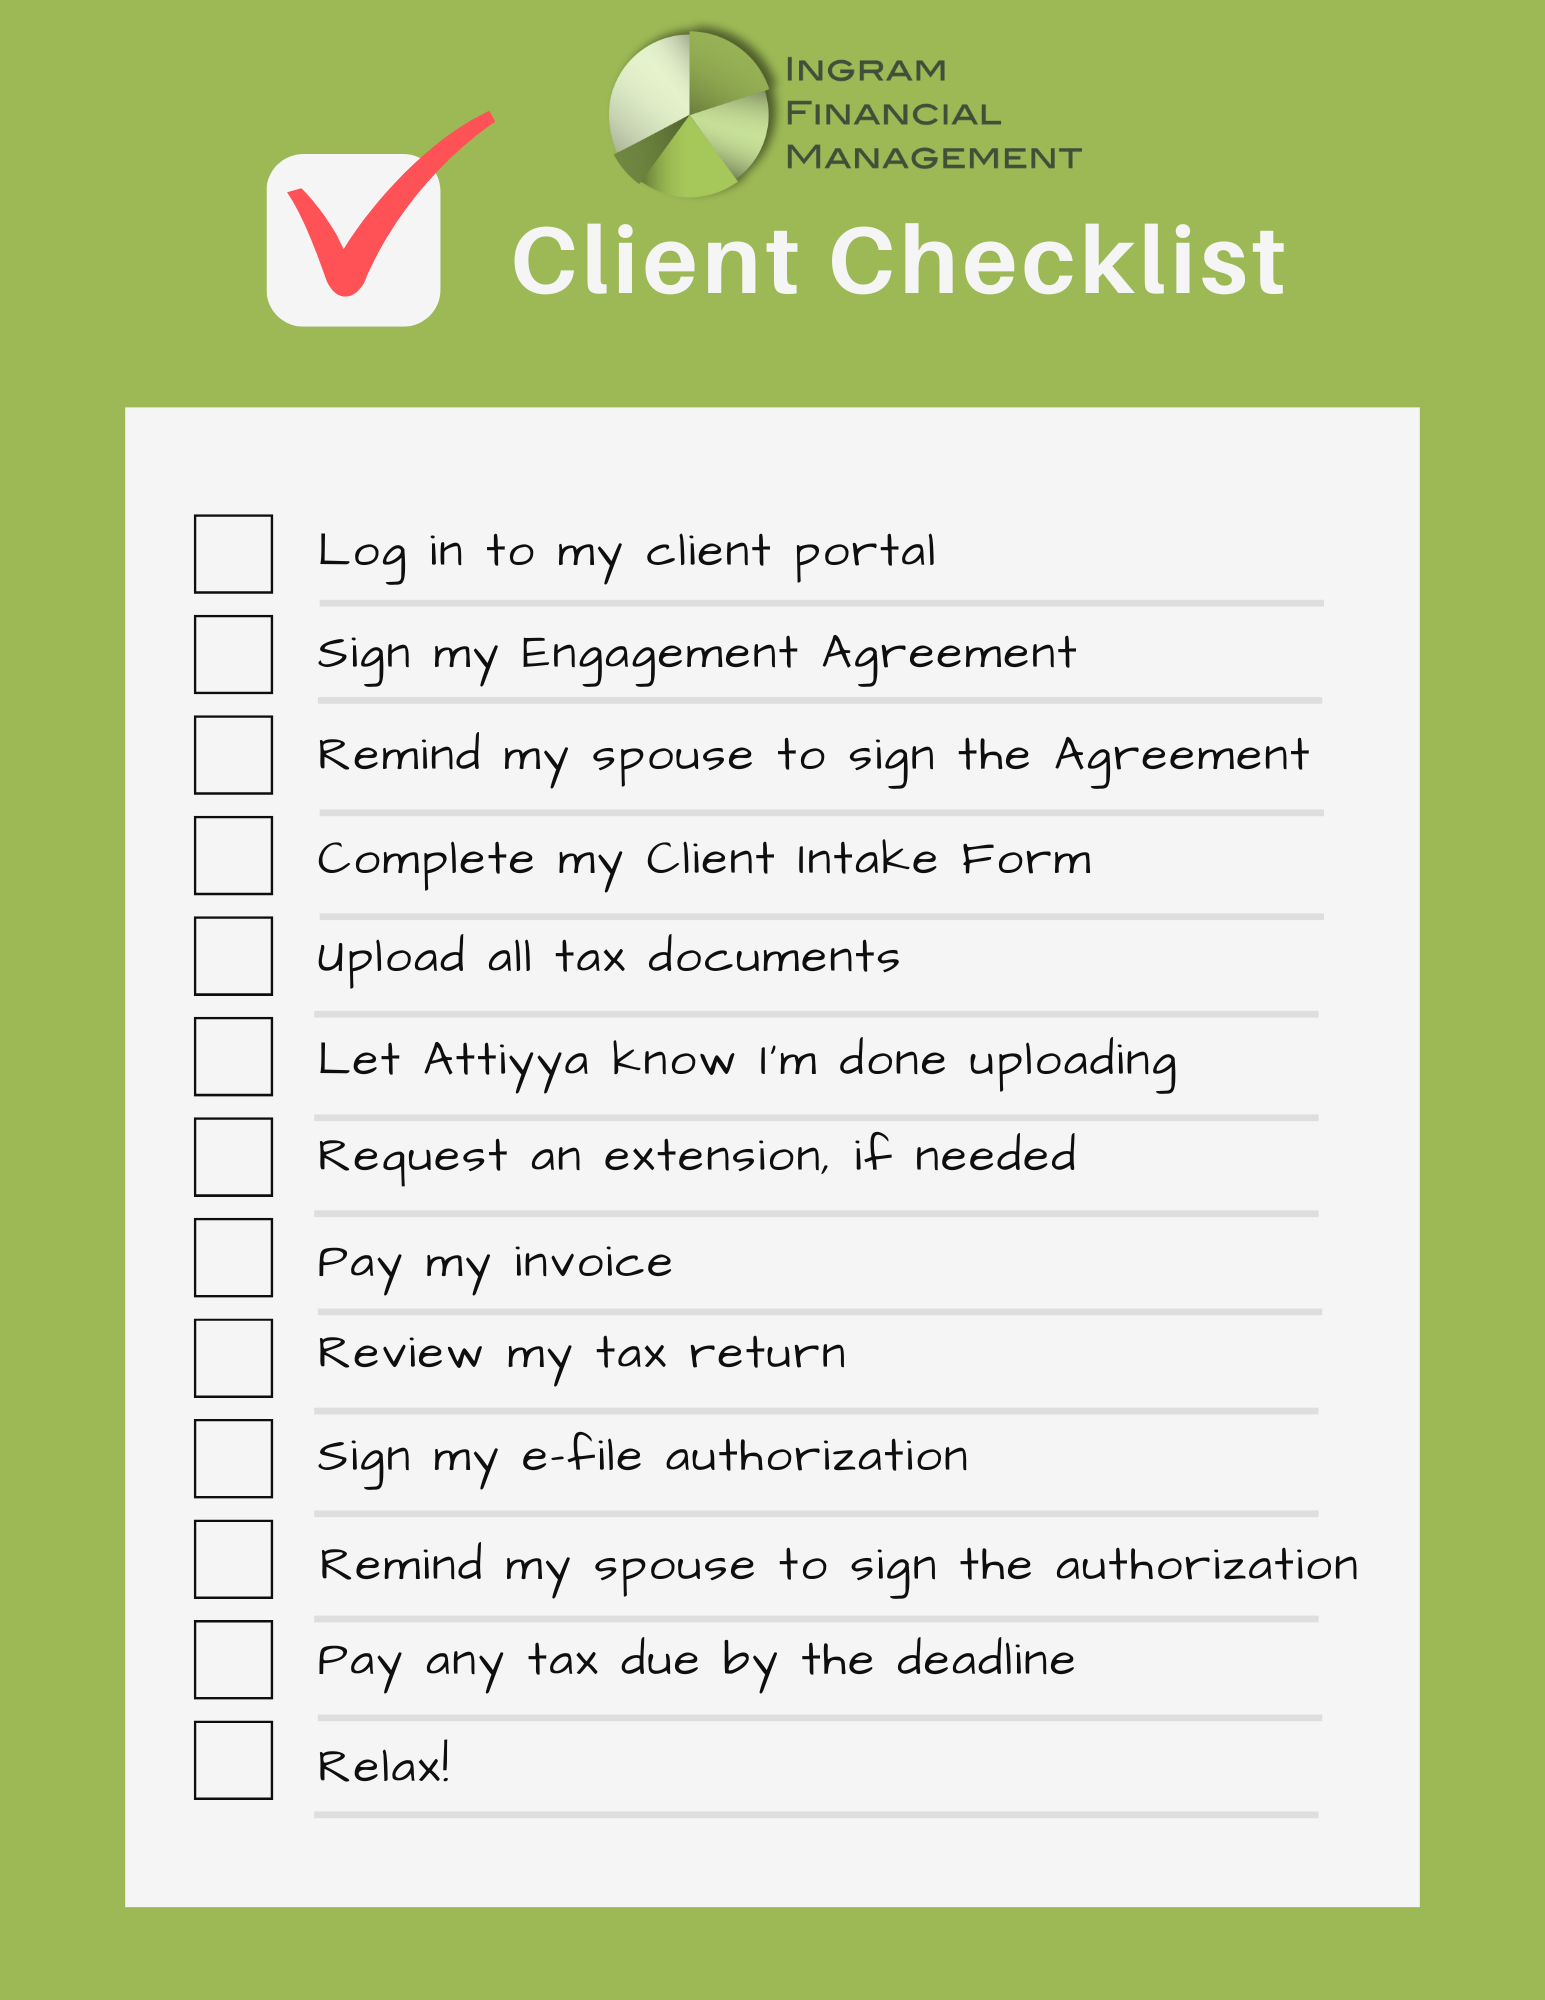 Your Tax Checklist